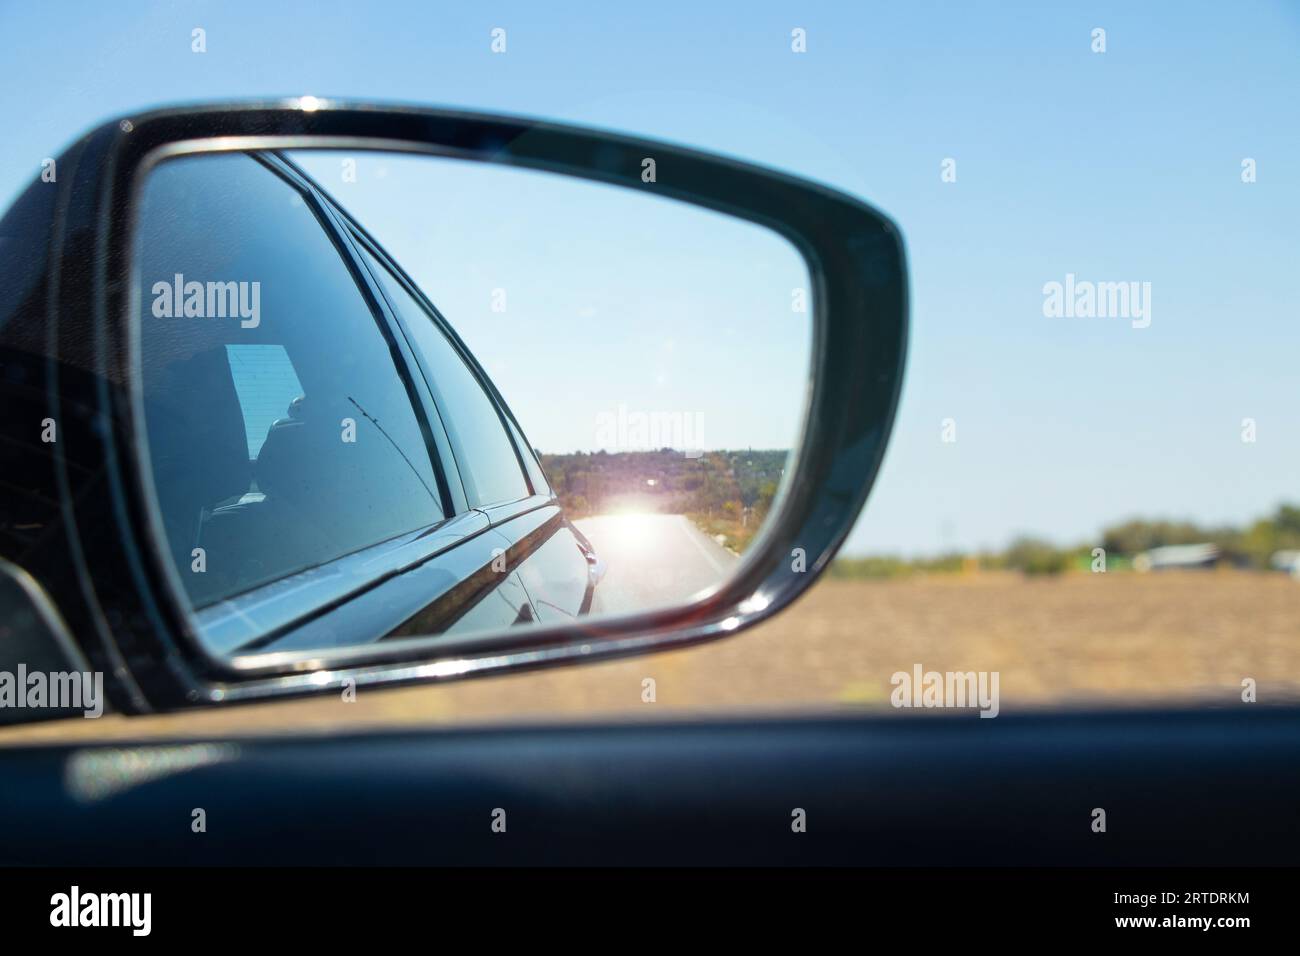 Closeup Rearview Mirror Car At Full Speed At Night In Big Modern